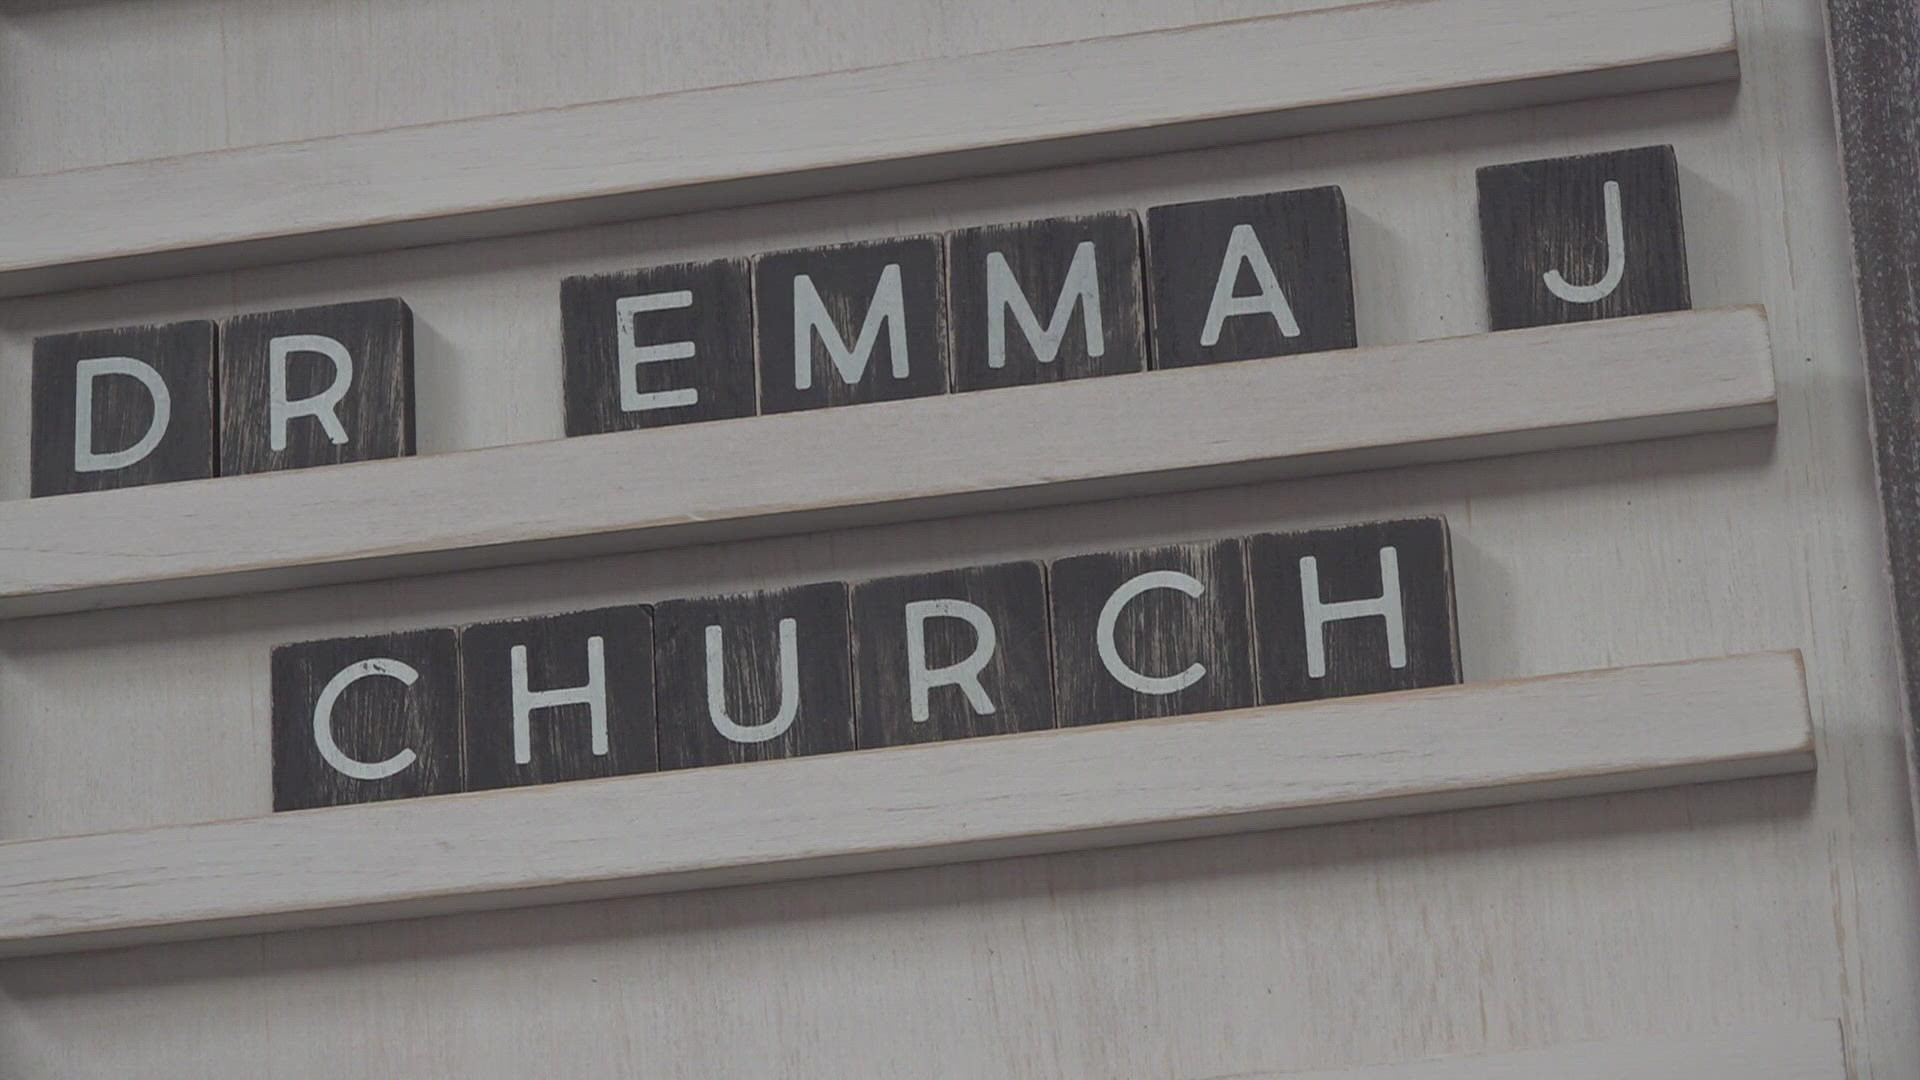 Dr. Emma Church speaks on LGBTQ+ pride.